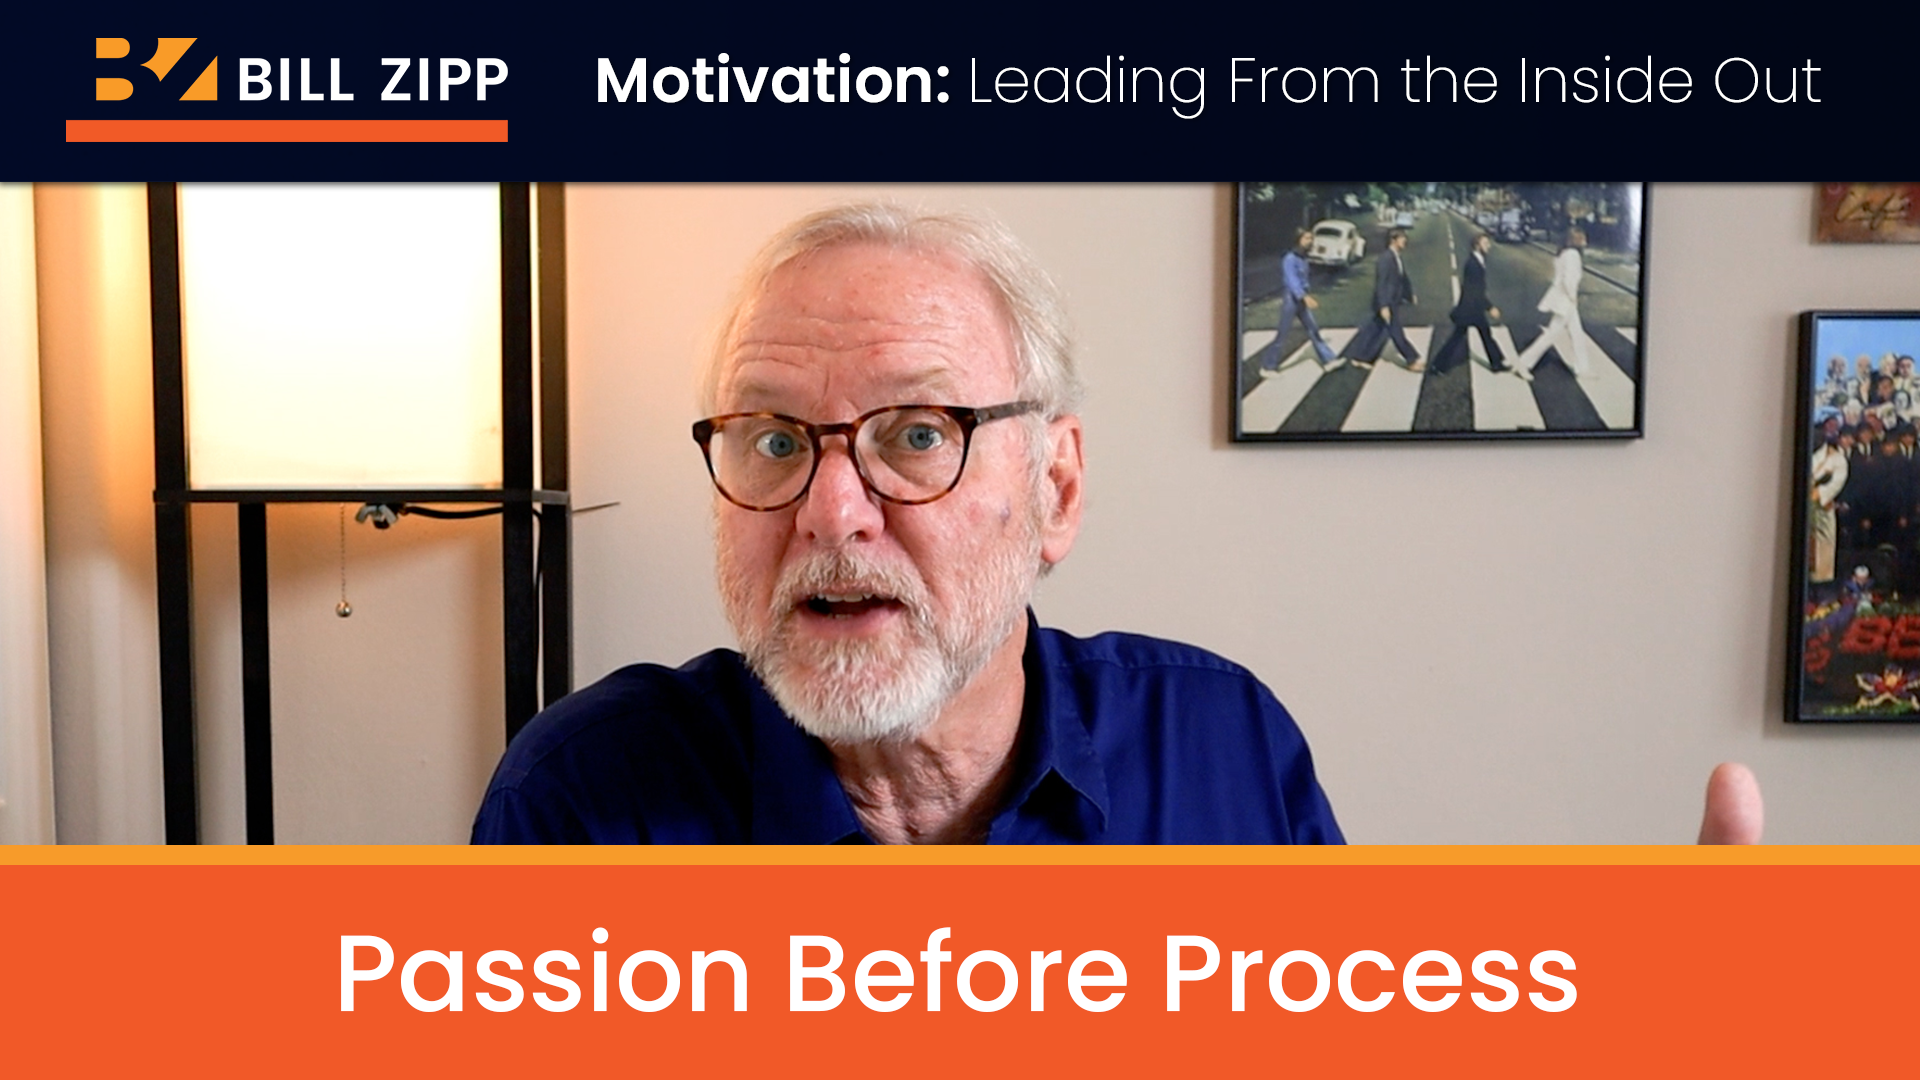 Secret One: Put Passion before Process